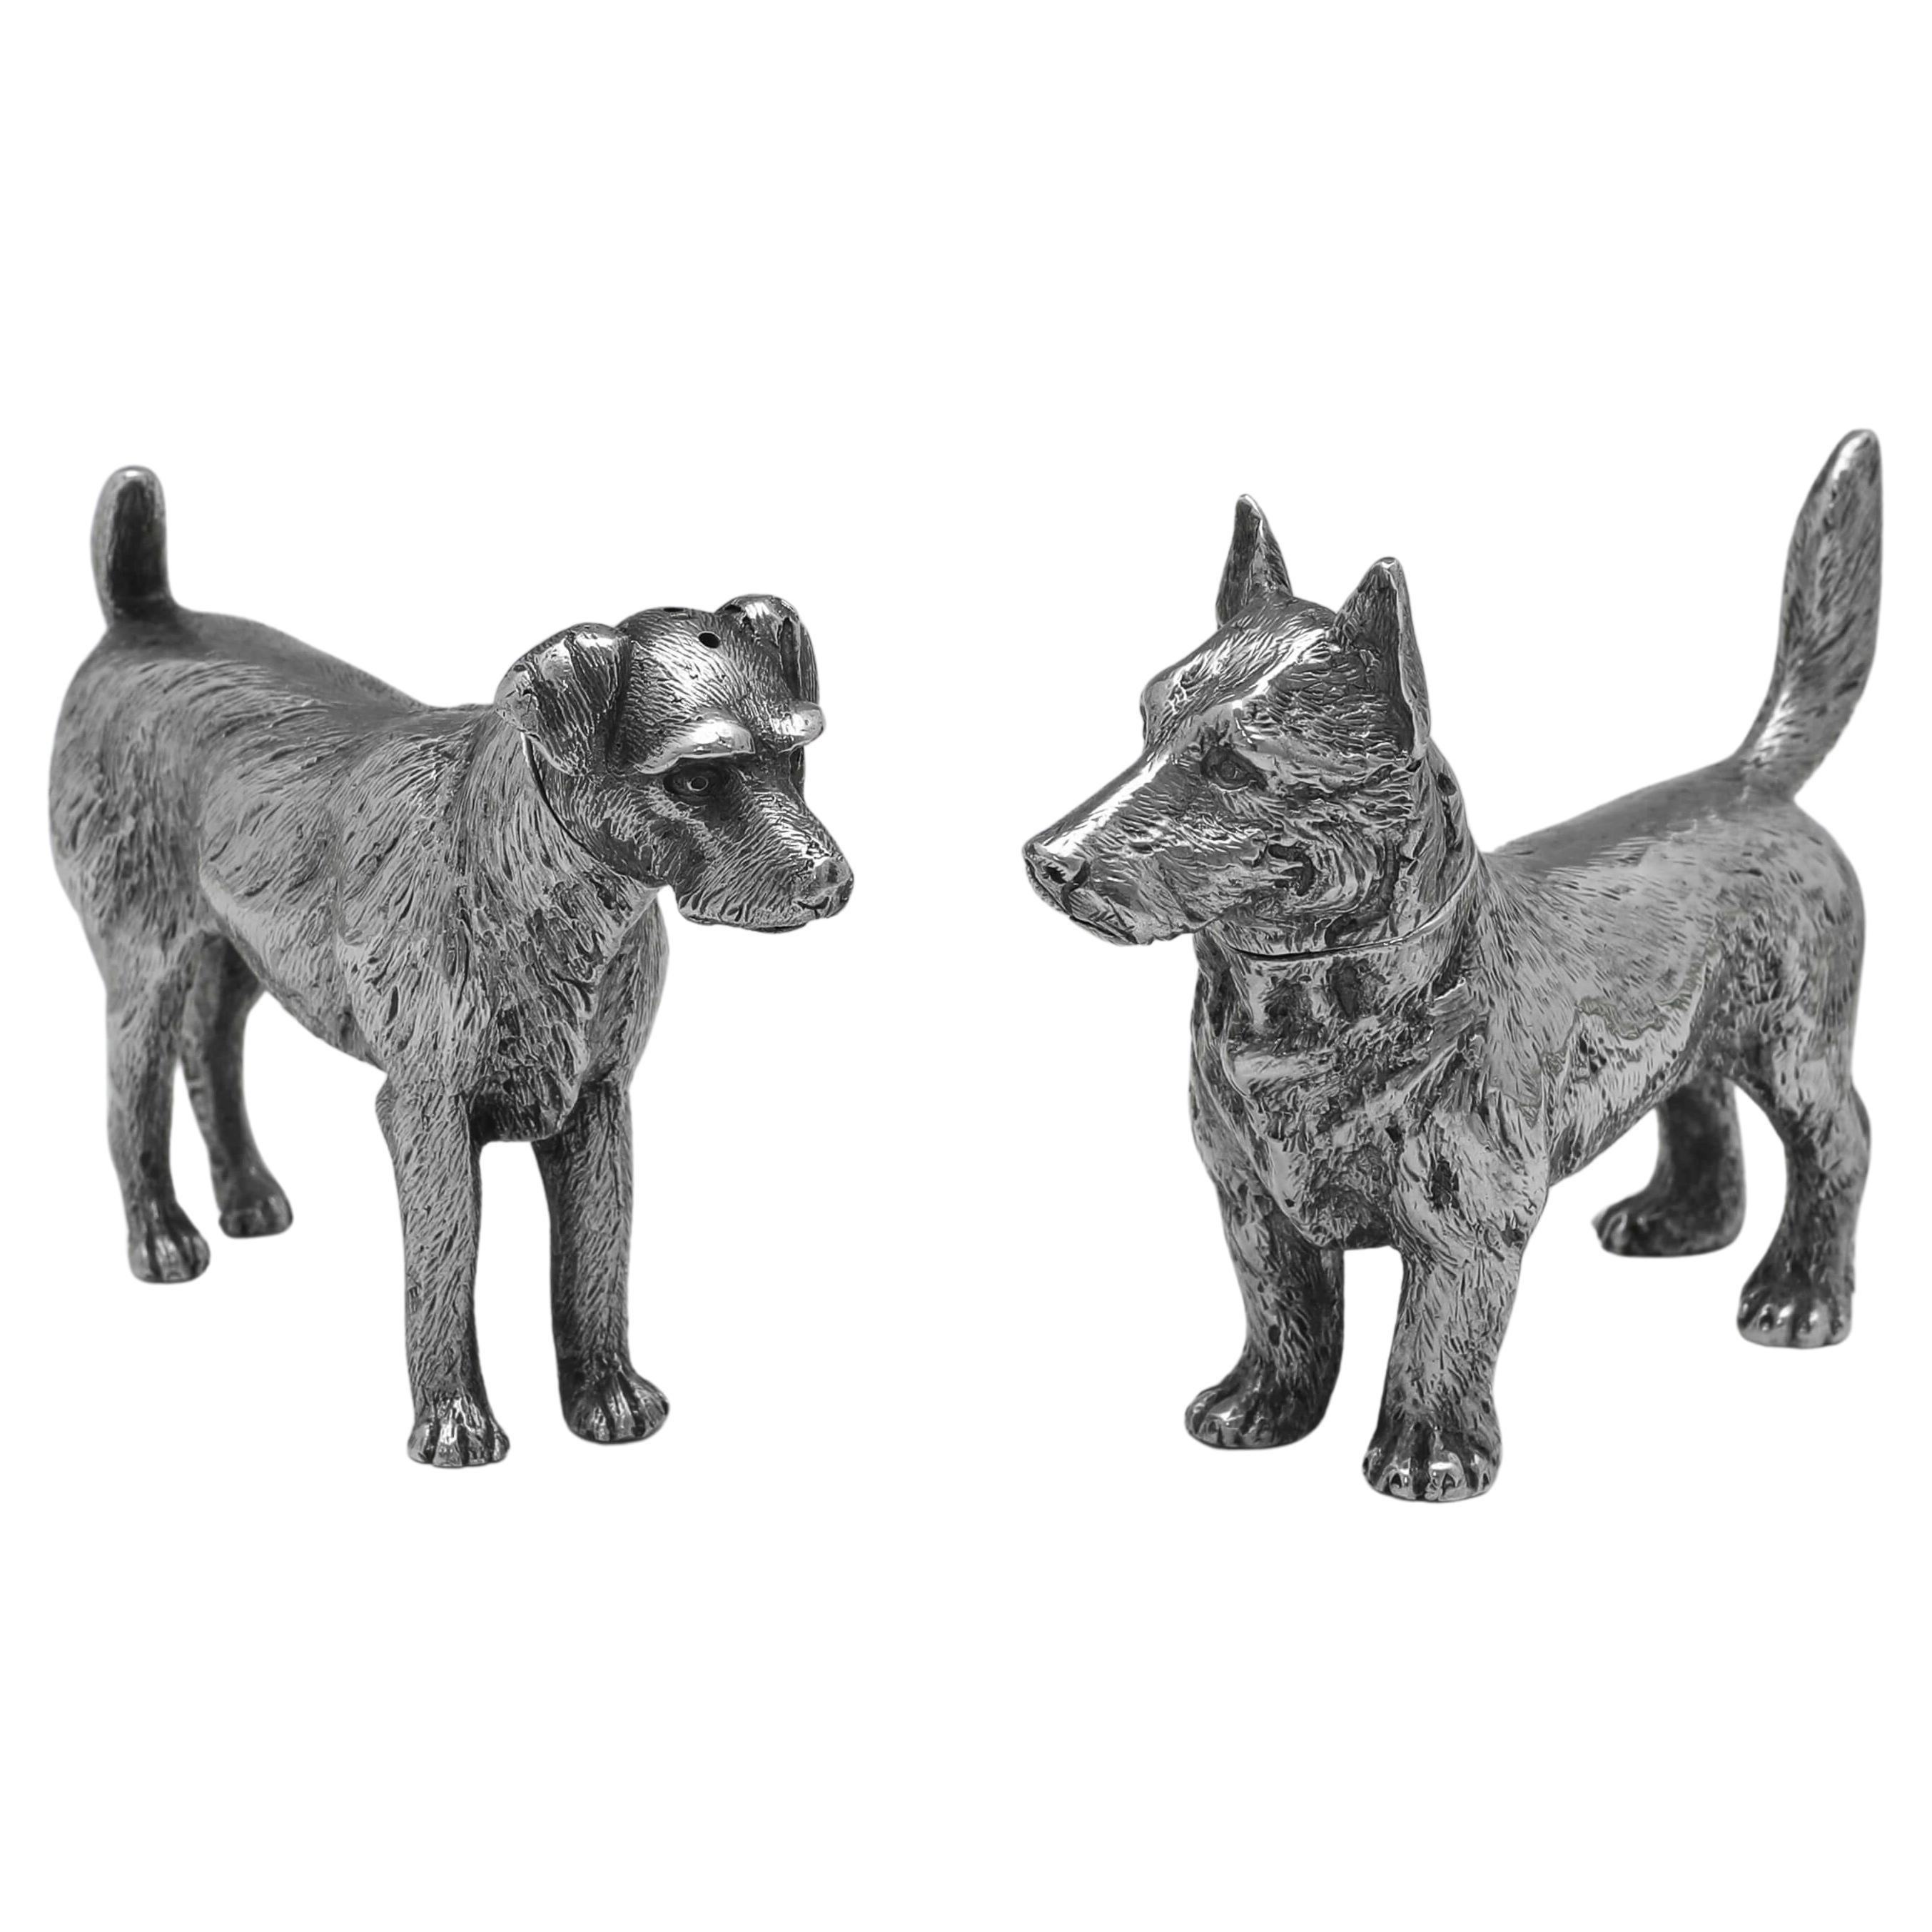 Rare Pair of Edwardian Sterling Silver Dog Pepper Pots - Terrier Models - 1904